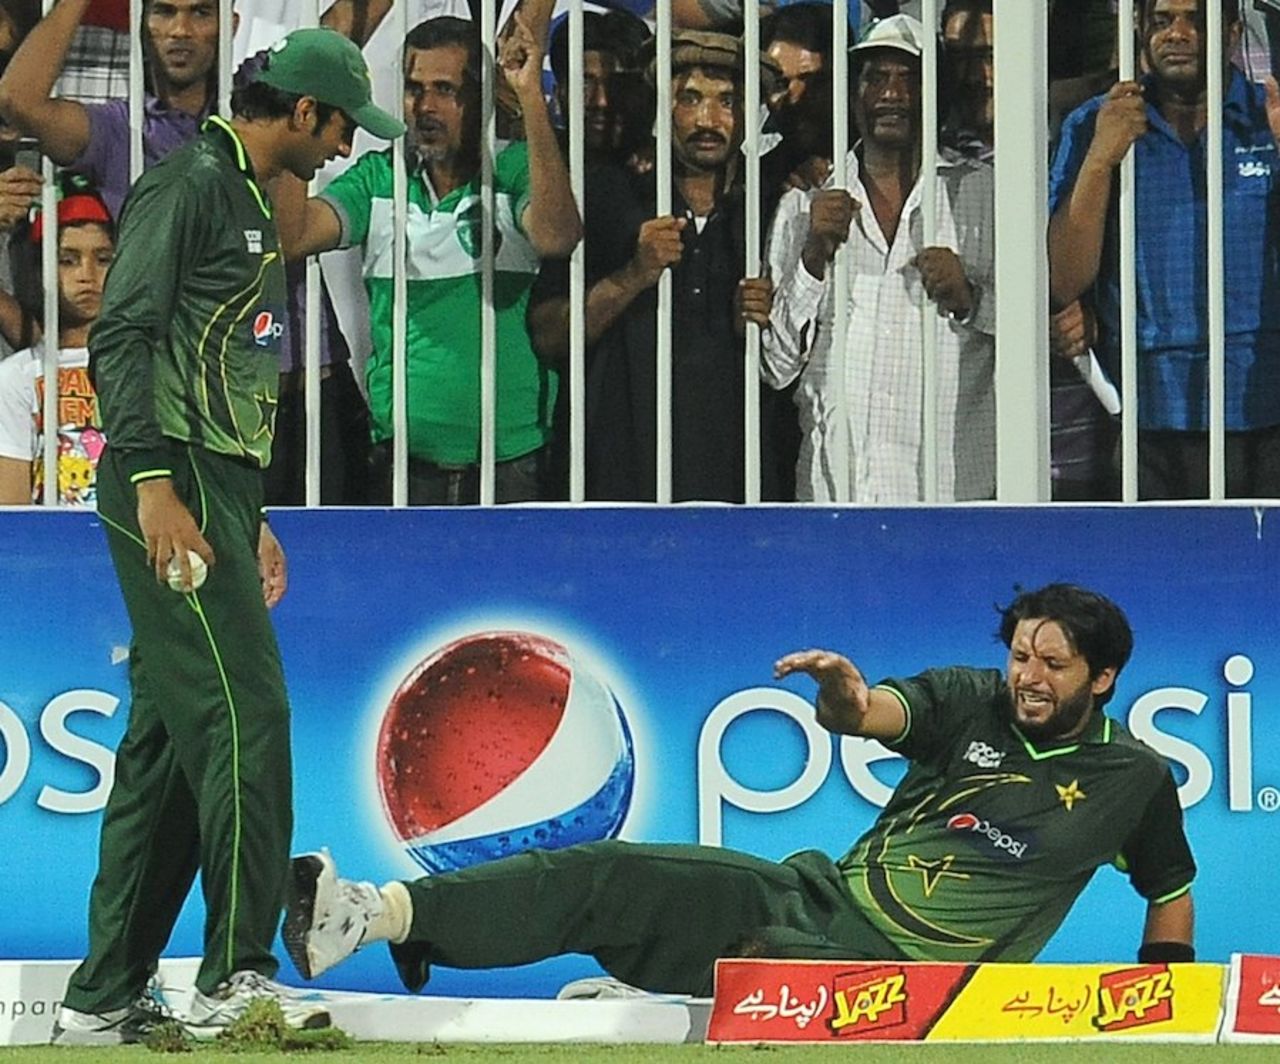 Shahid Afridi hurt his leg diving in the outfield, Pakistan v Sri Lanka, 4th ODI, Sharjah, November 20, 2011